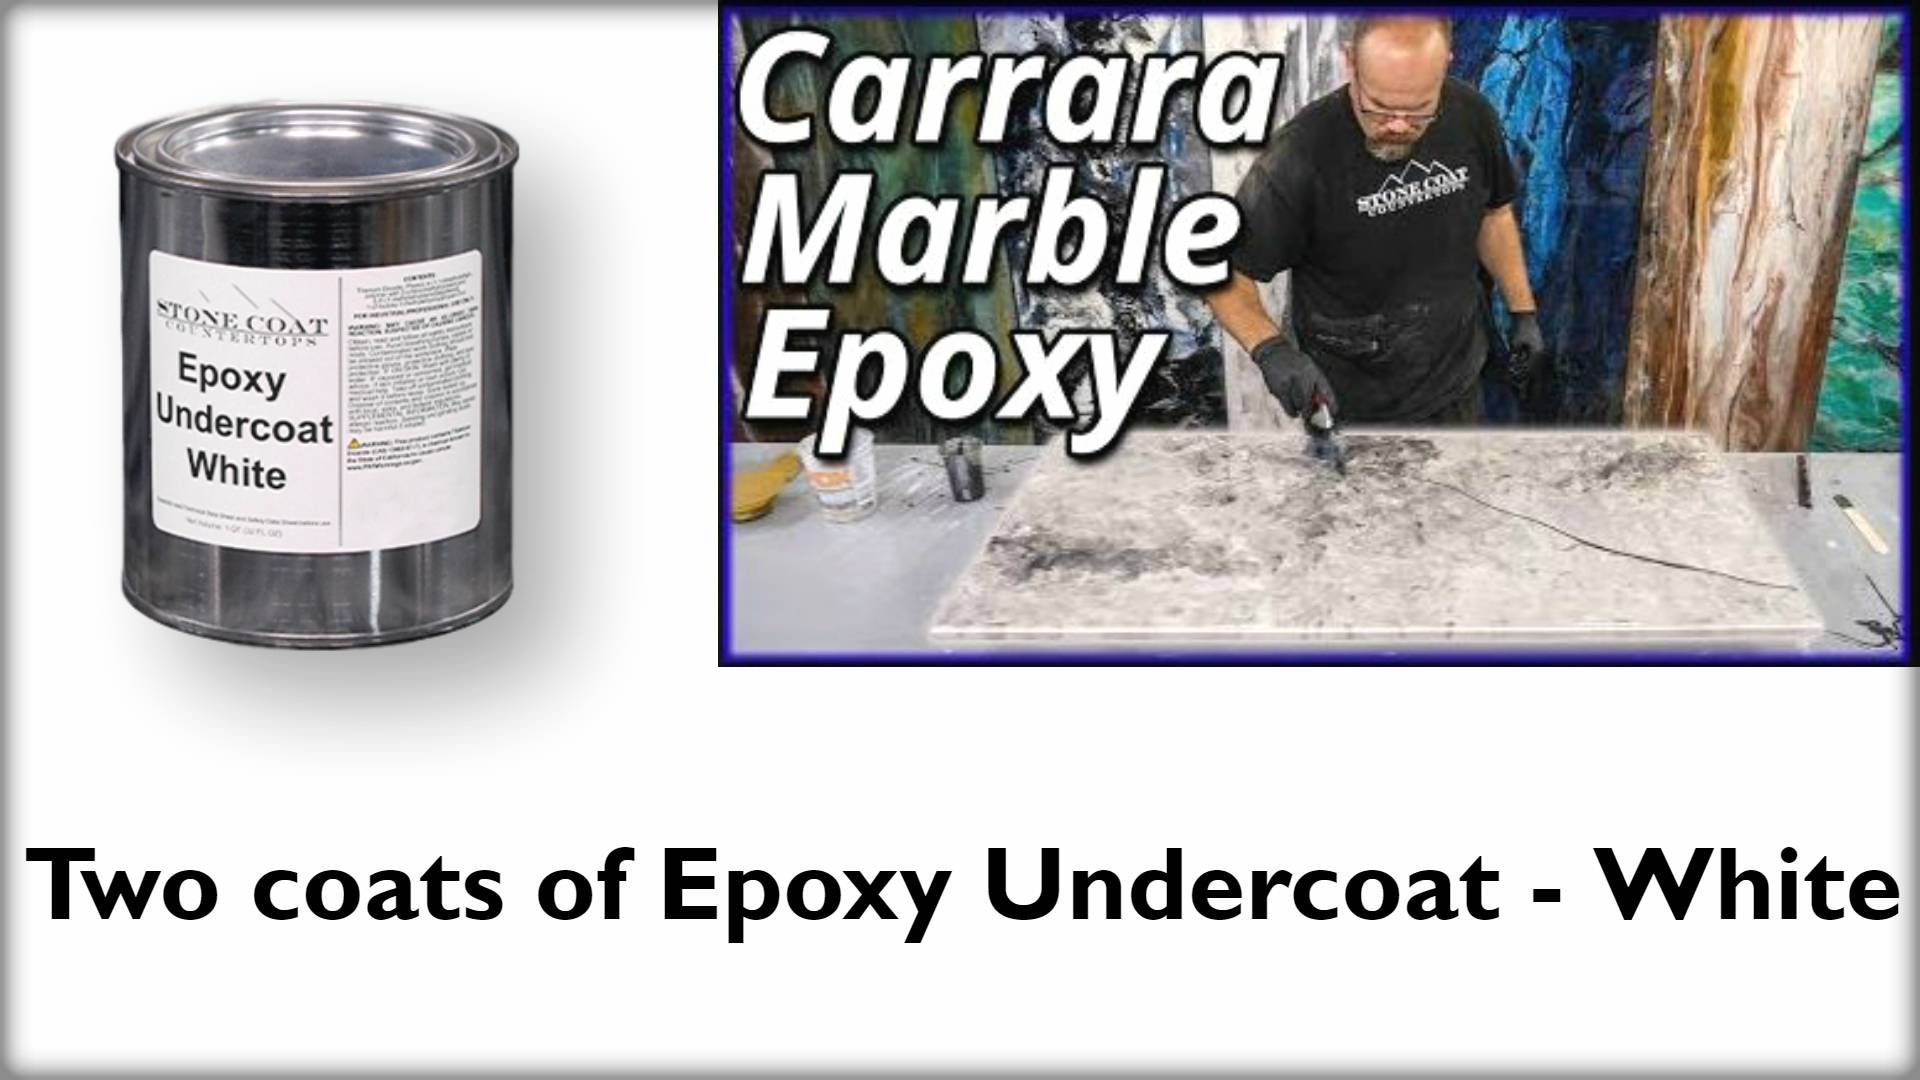 Carrara Marble Epoxy with two coats of White Epoxy Undercoat.